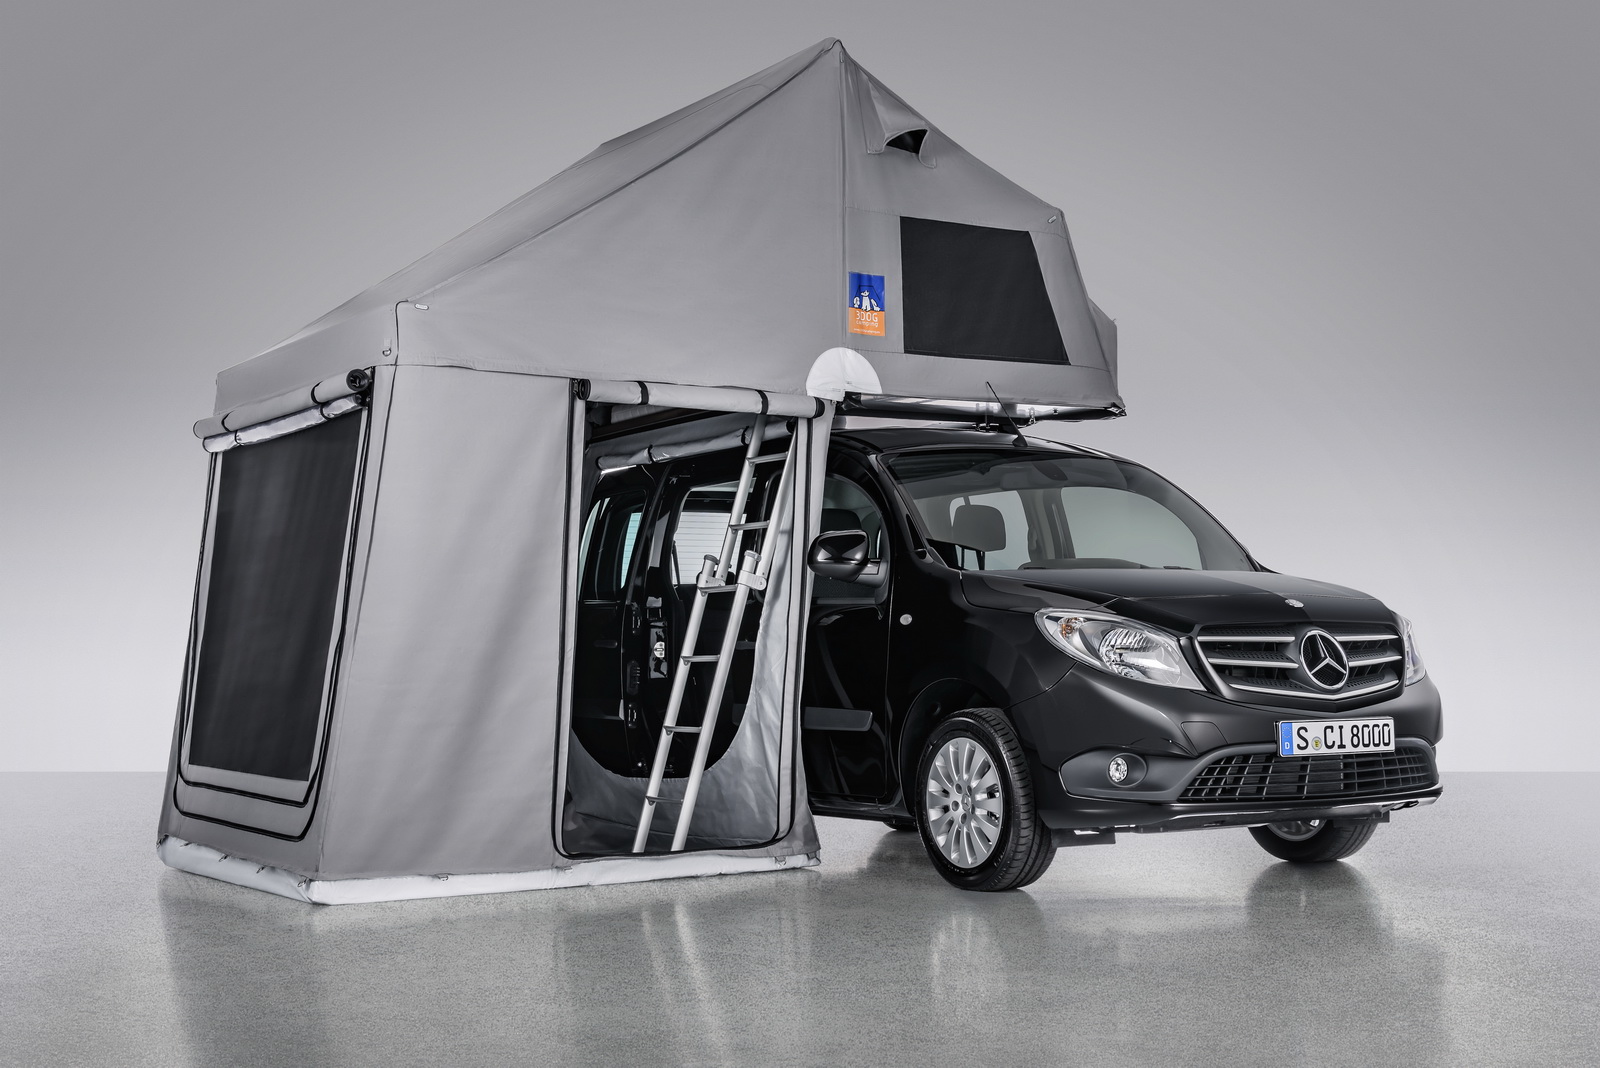 TopDog Dachzelt von 3DOG camping auf Mercedes-Benz Citan Basis– Exterieur, aufgestelltes Dachzelt ;TopDog rooftop tent from 3DOG camping on Mercedes-Benz Citan base – Exterior, pop-up roof;